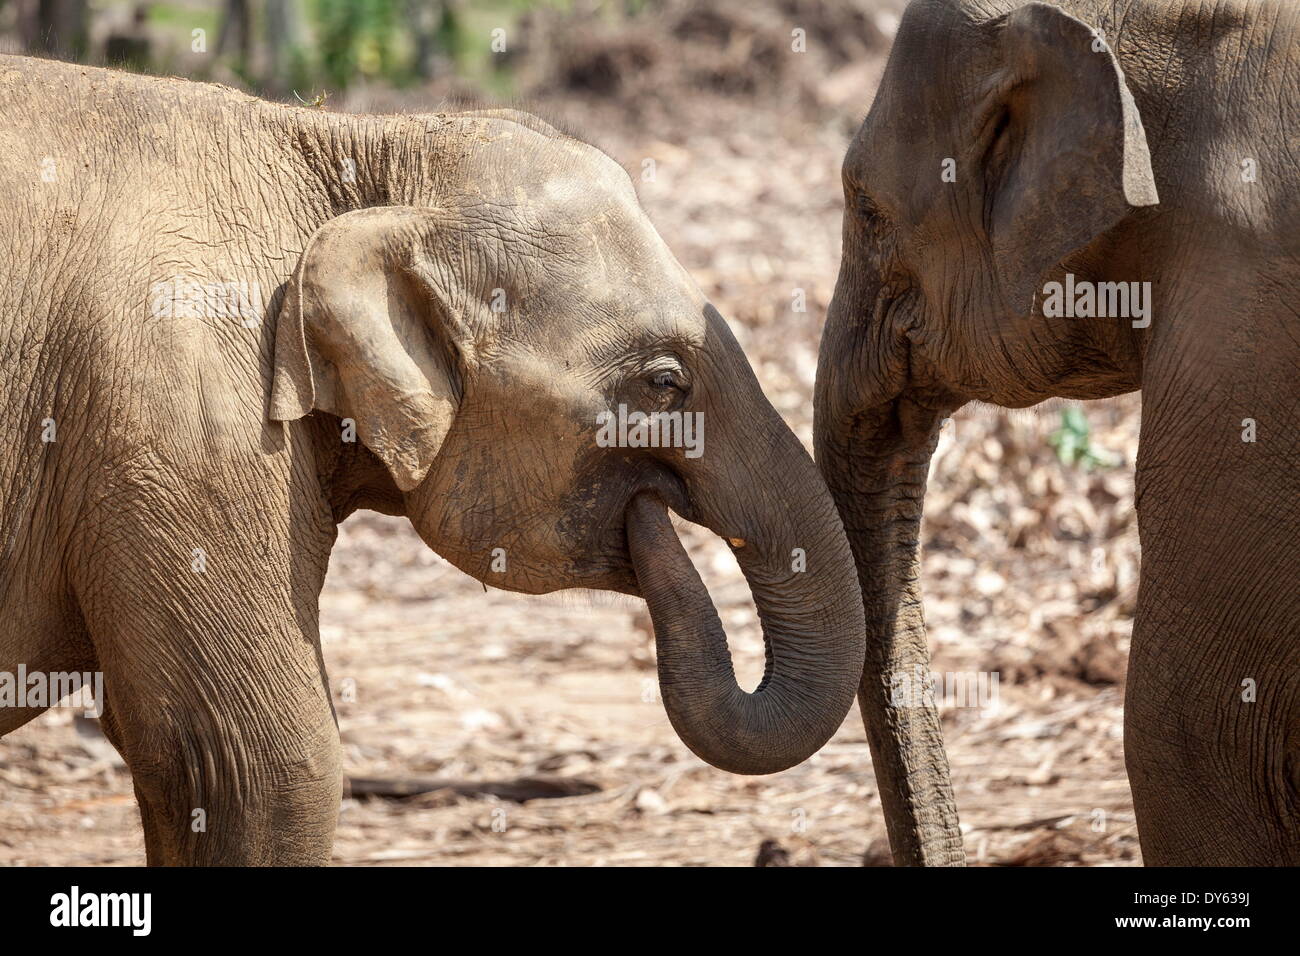 Juvenile Elefanten (Elephantidae) spielen mit ihrer Stämme, Pinnewala Elephant Orphanage, Sri Lanka, Asien Stockfoto